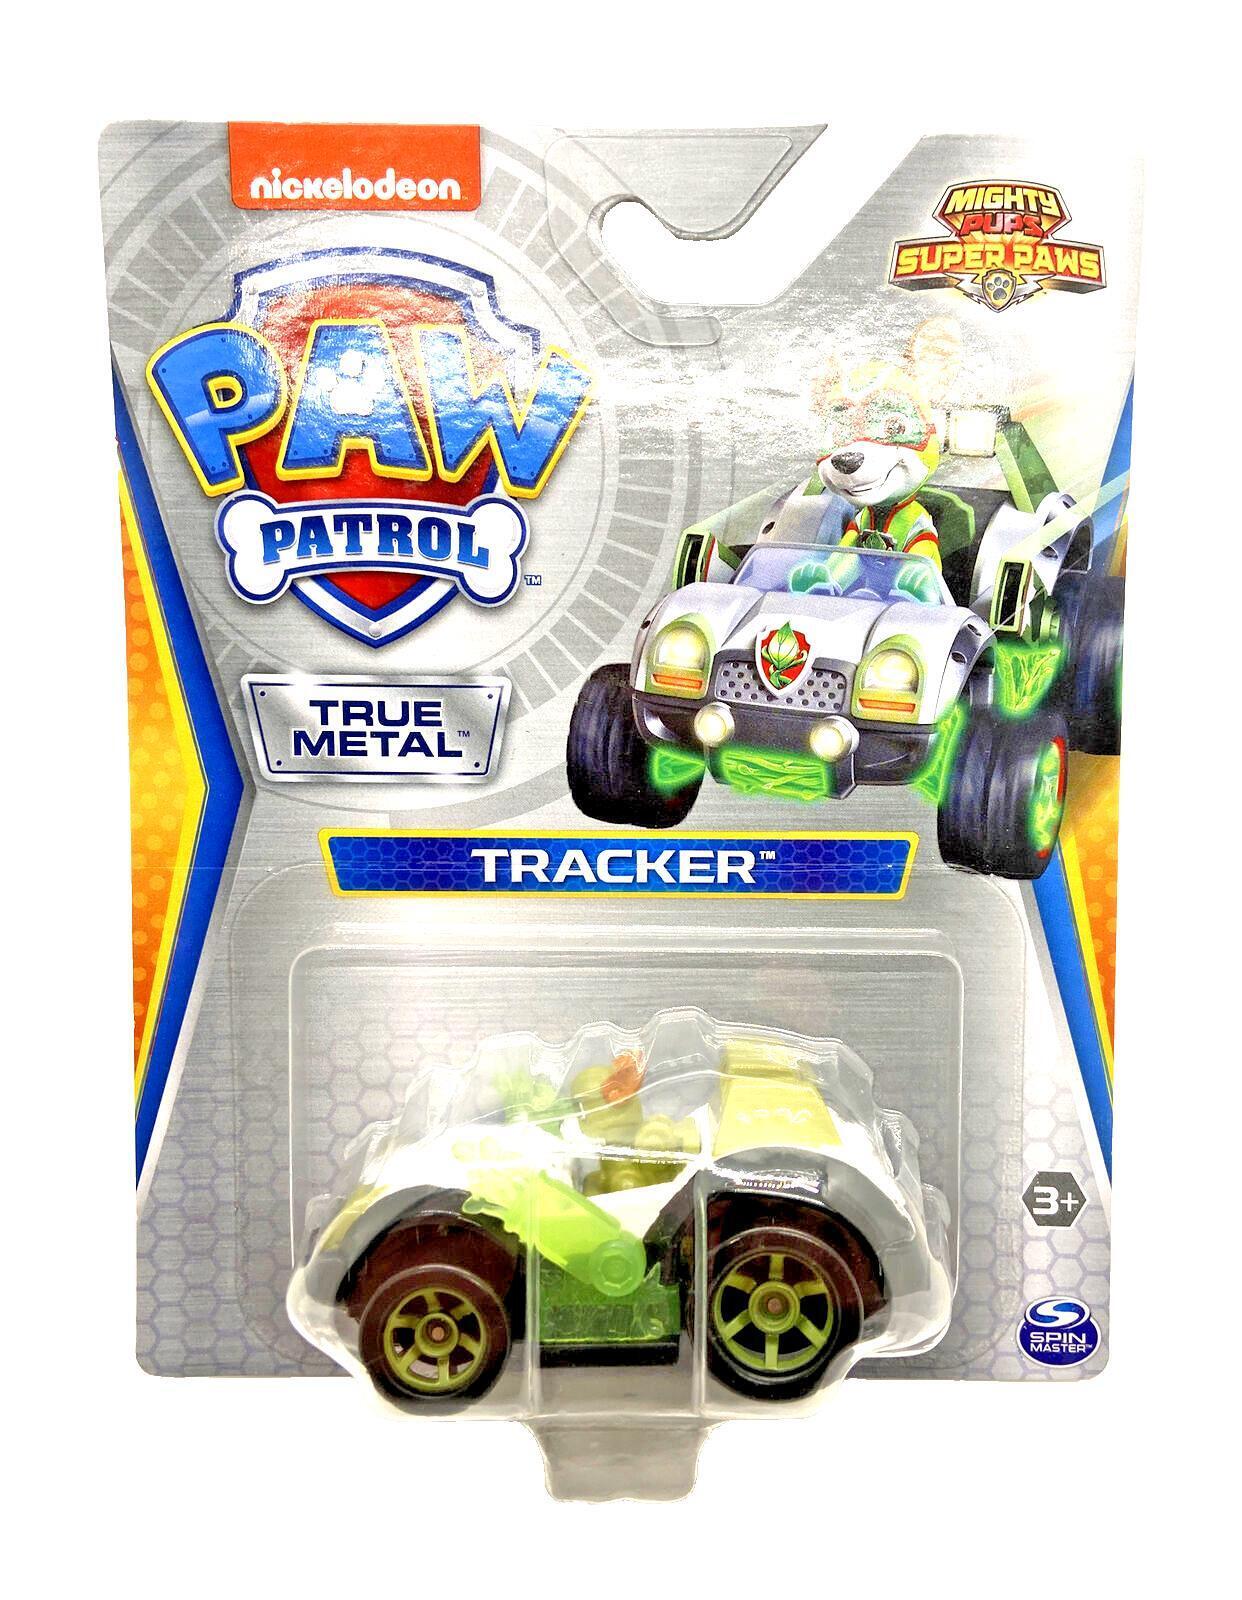 Paw patrol tracker mighty super paws die cast racer true metal vehicle